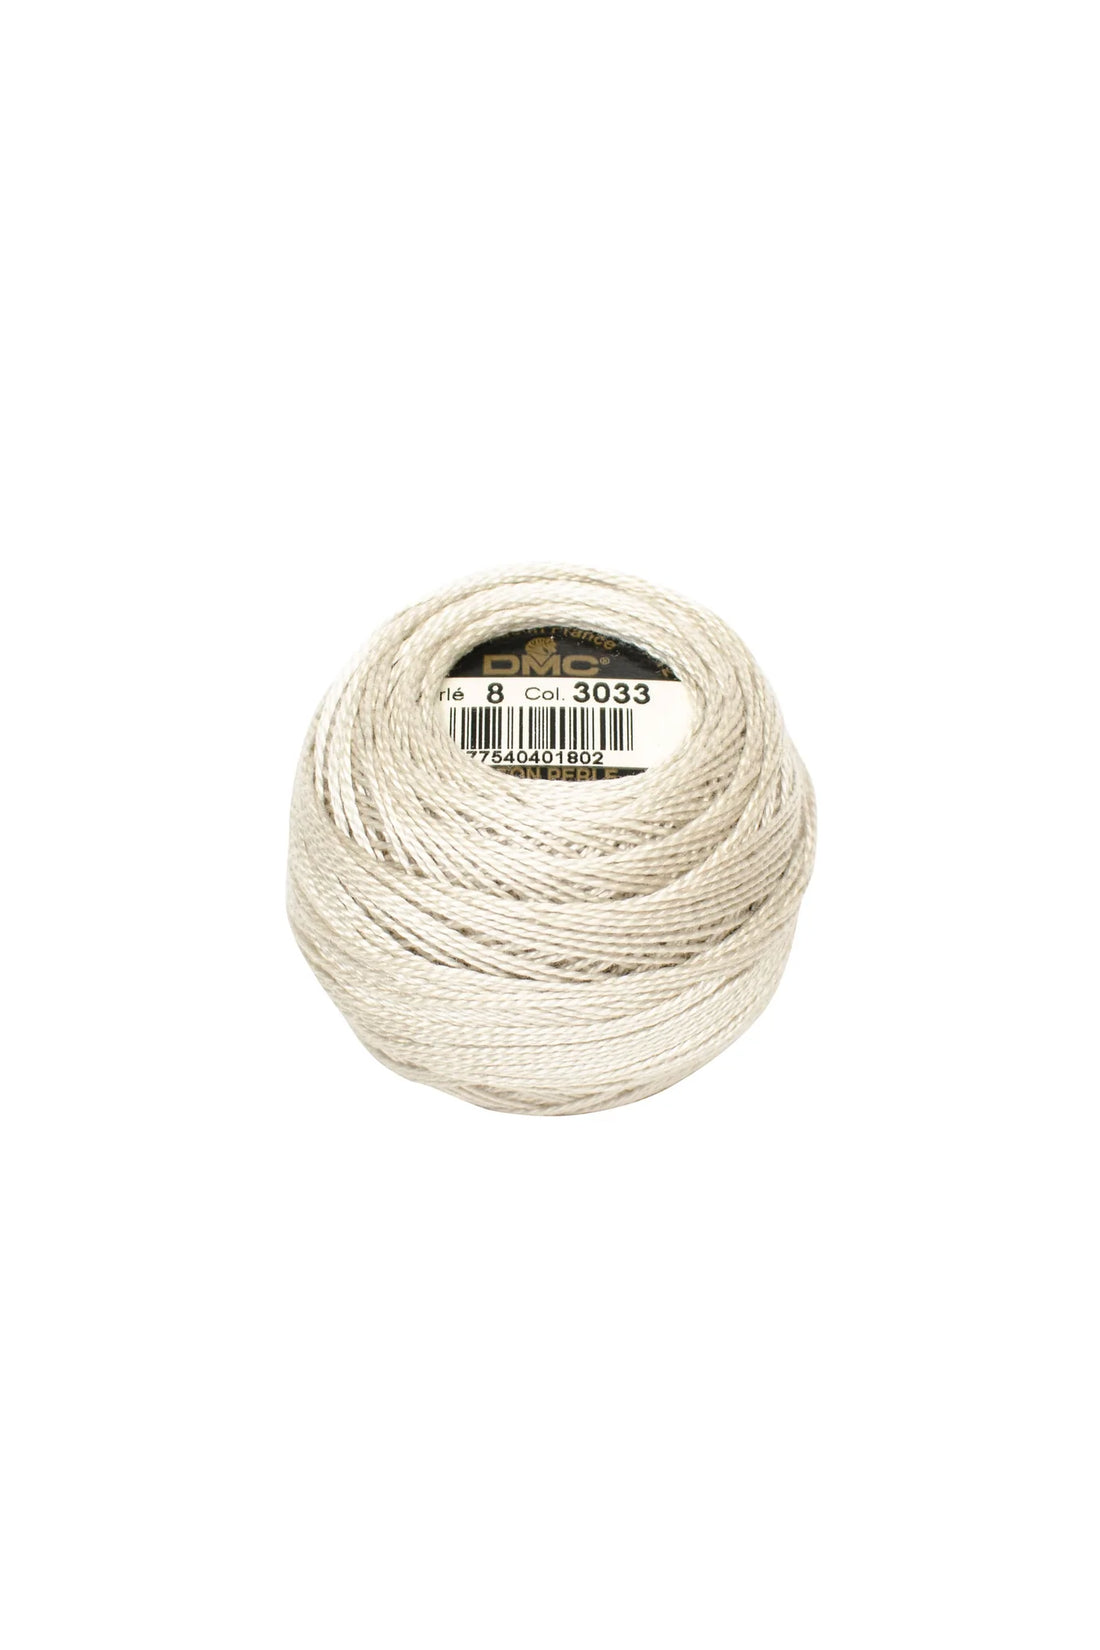 DMC Perle Cotton Thread No 3033 | Very Light Mocha Brown